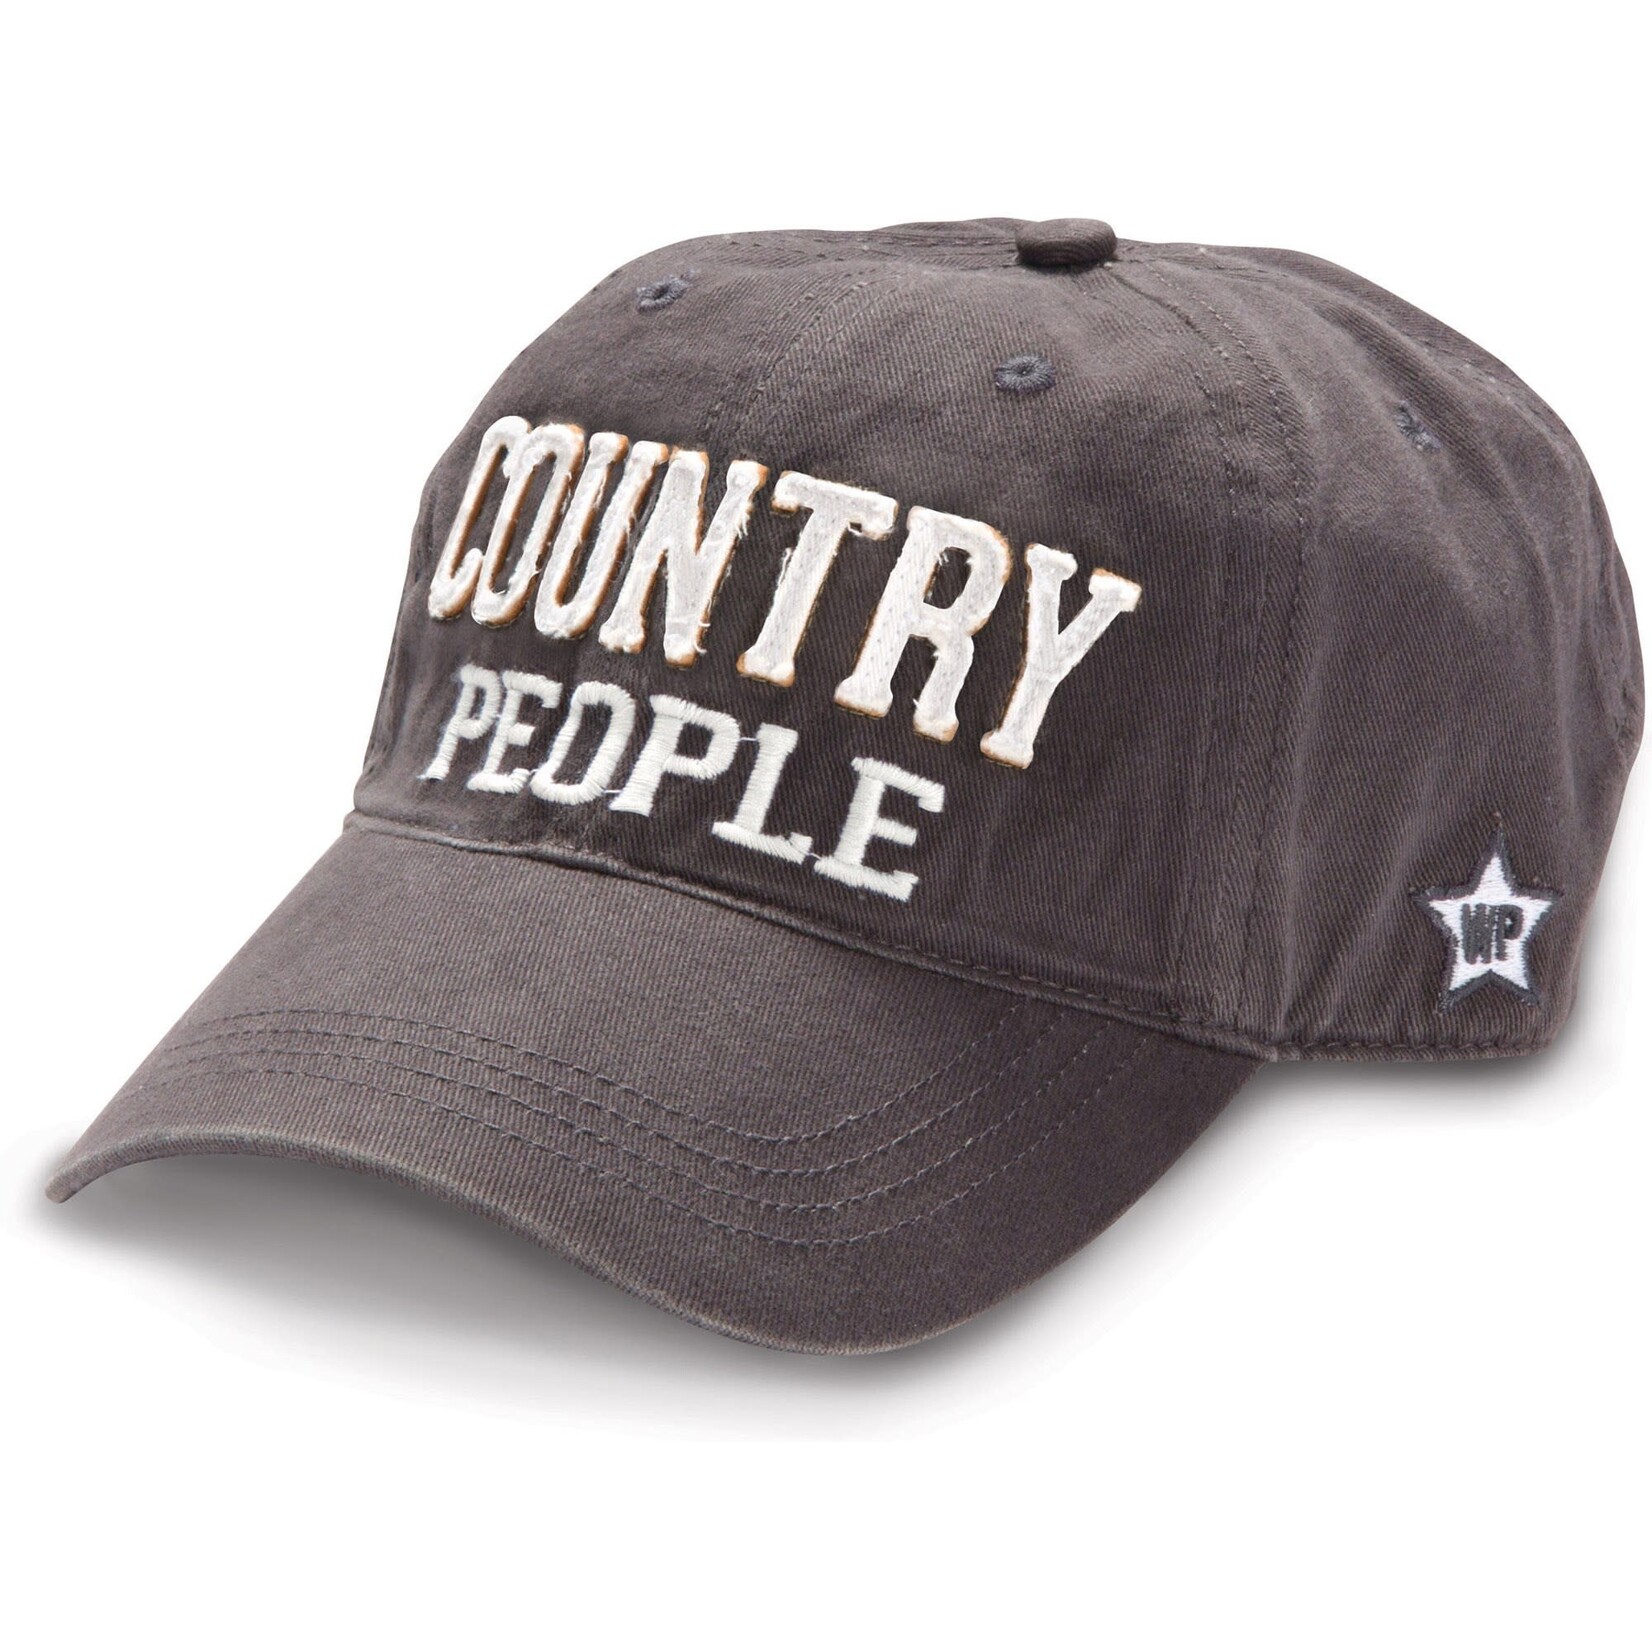 Country People Dark Grey Adjustable Hat